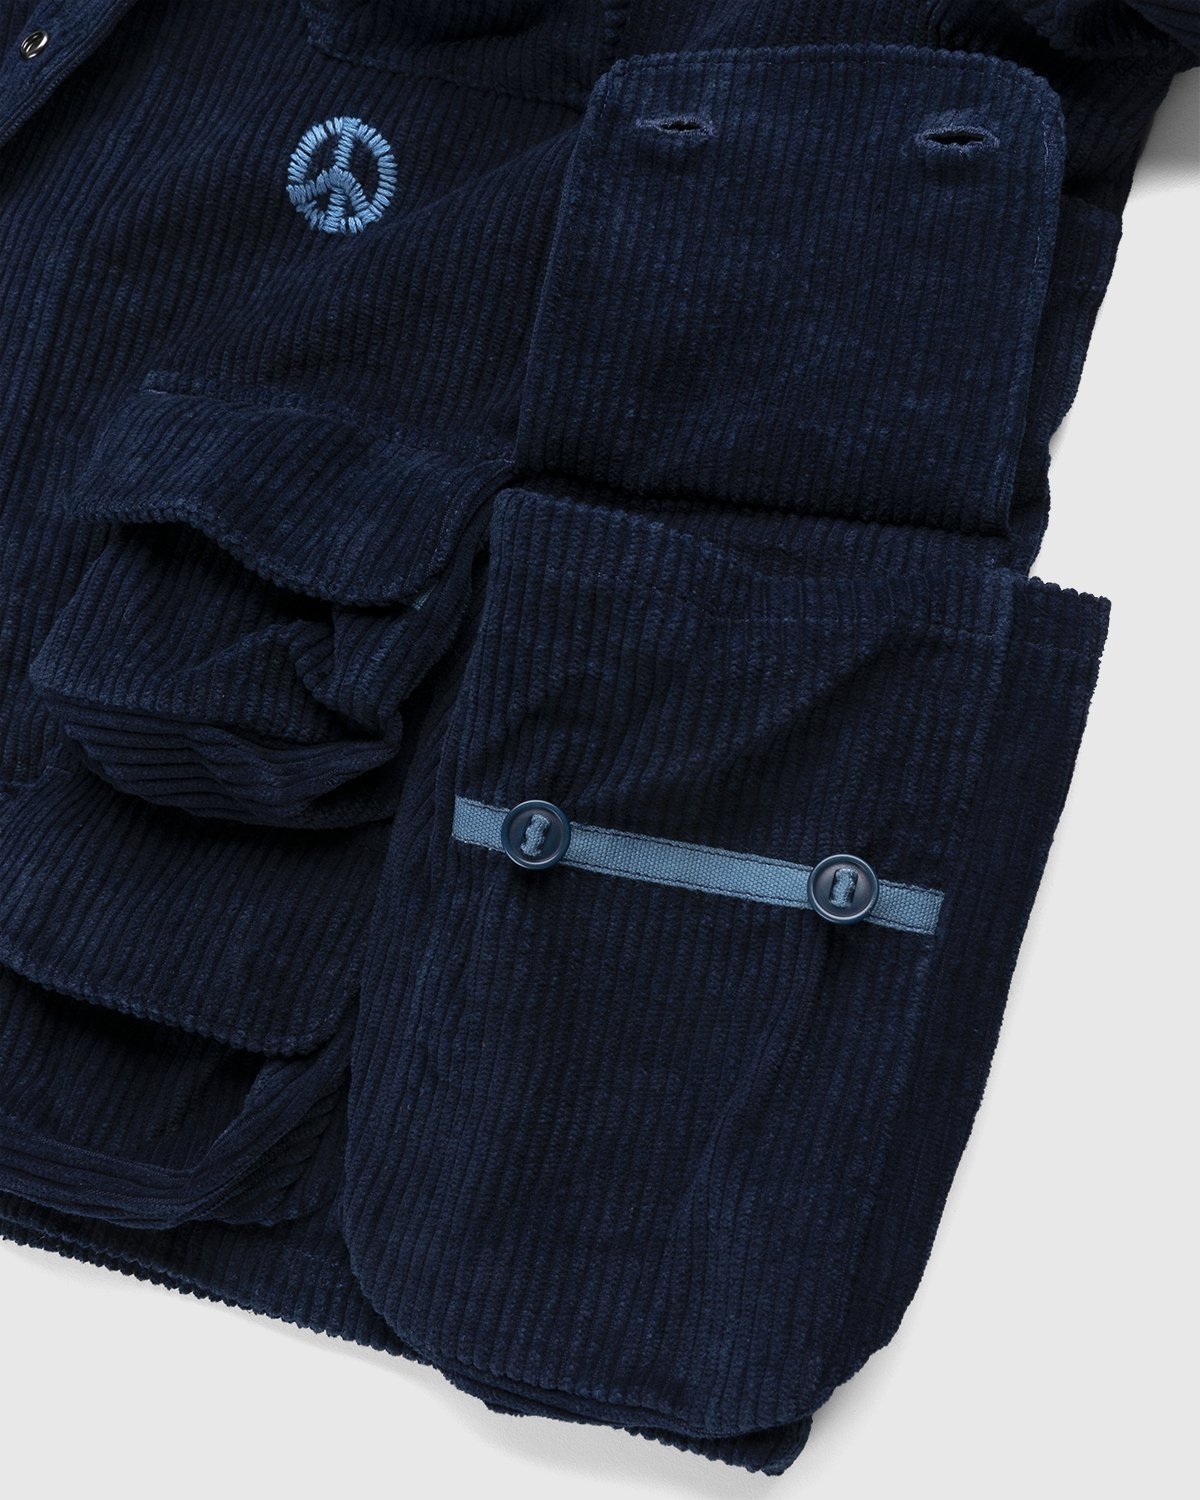 Story mfg. – Rambler Jacket Deep Indigo Corduroy - Outerwear - Blue - Image 5